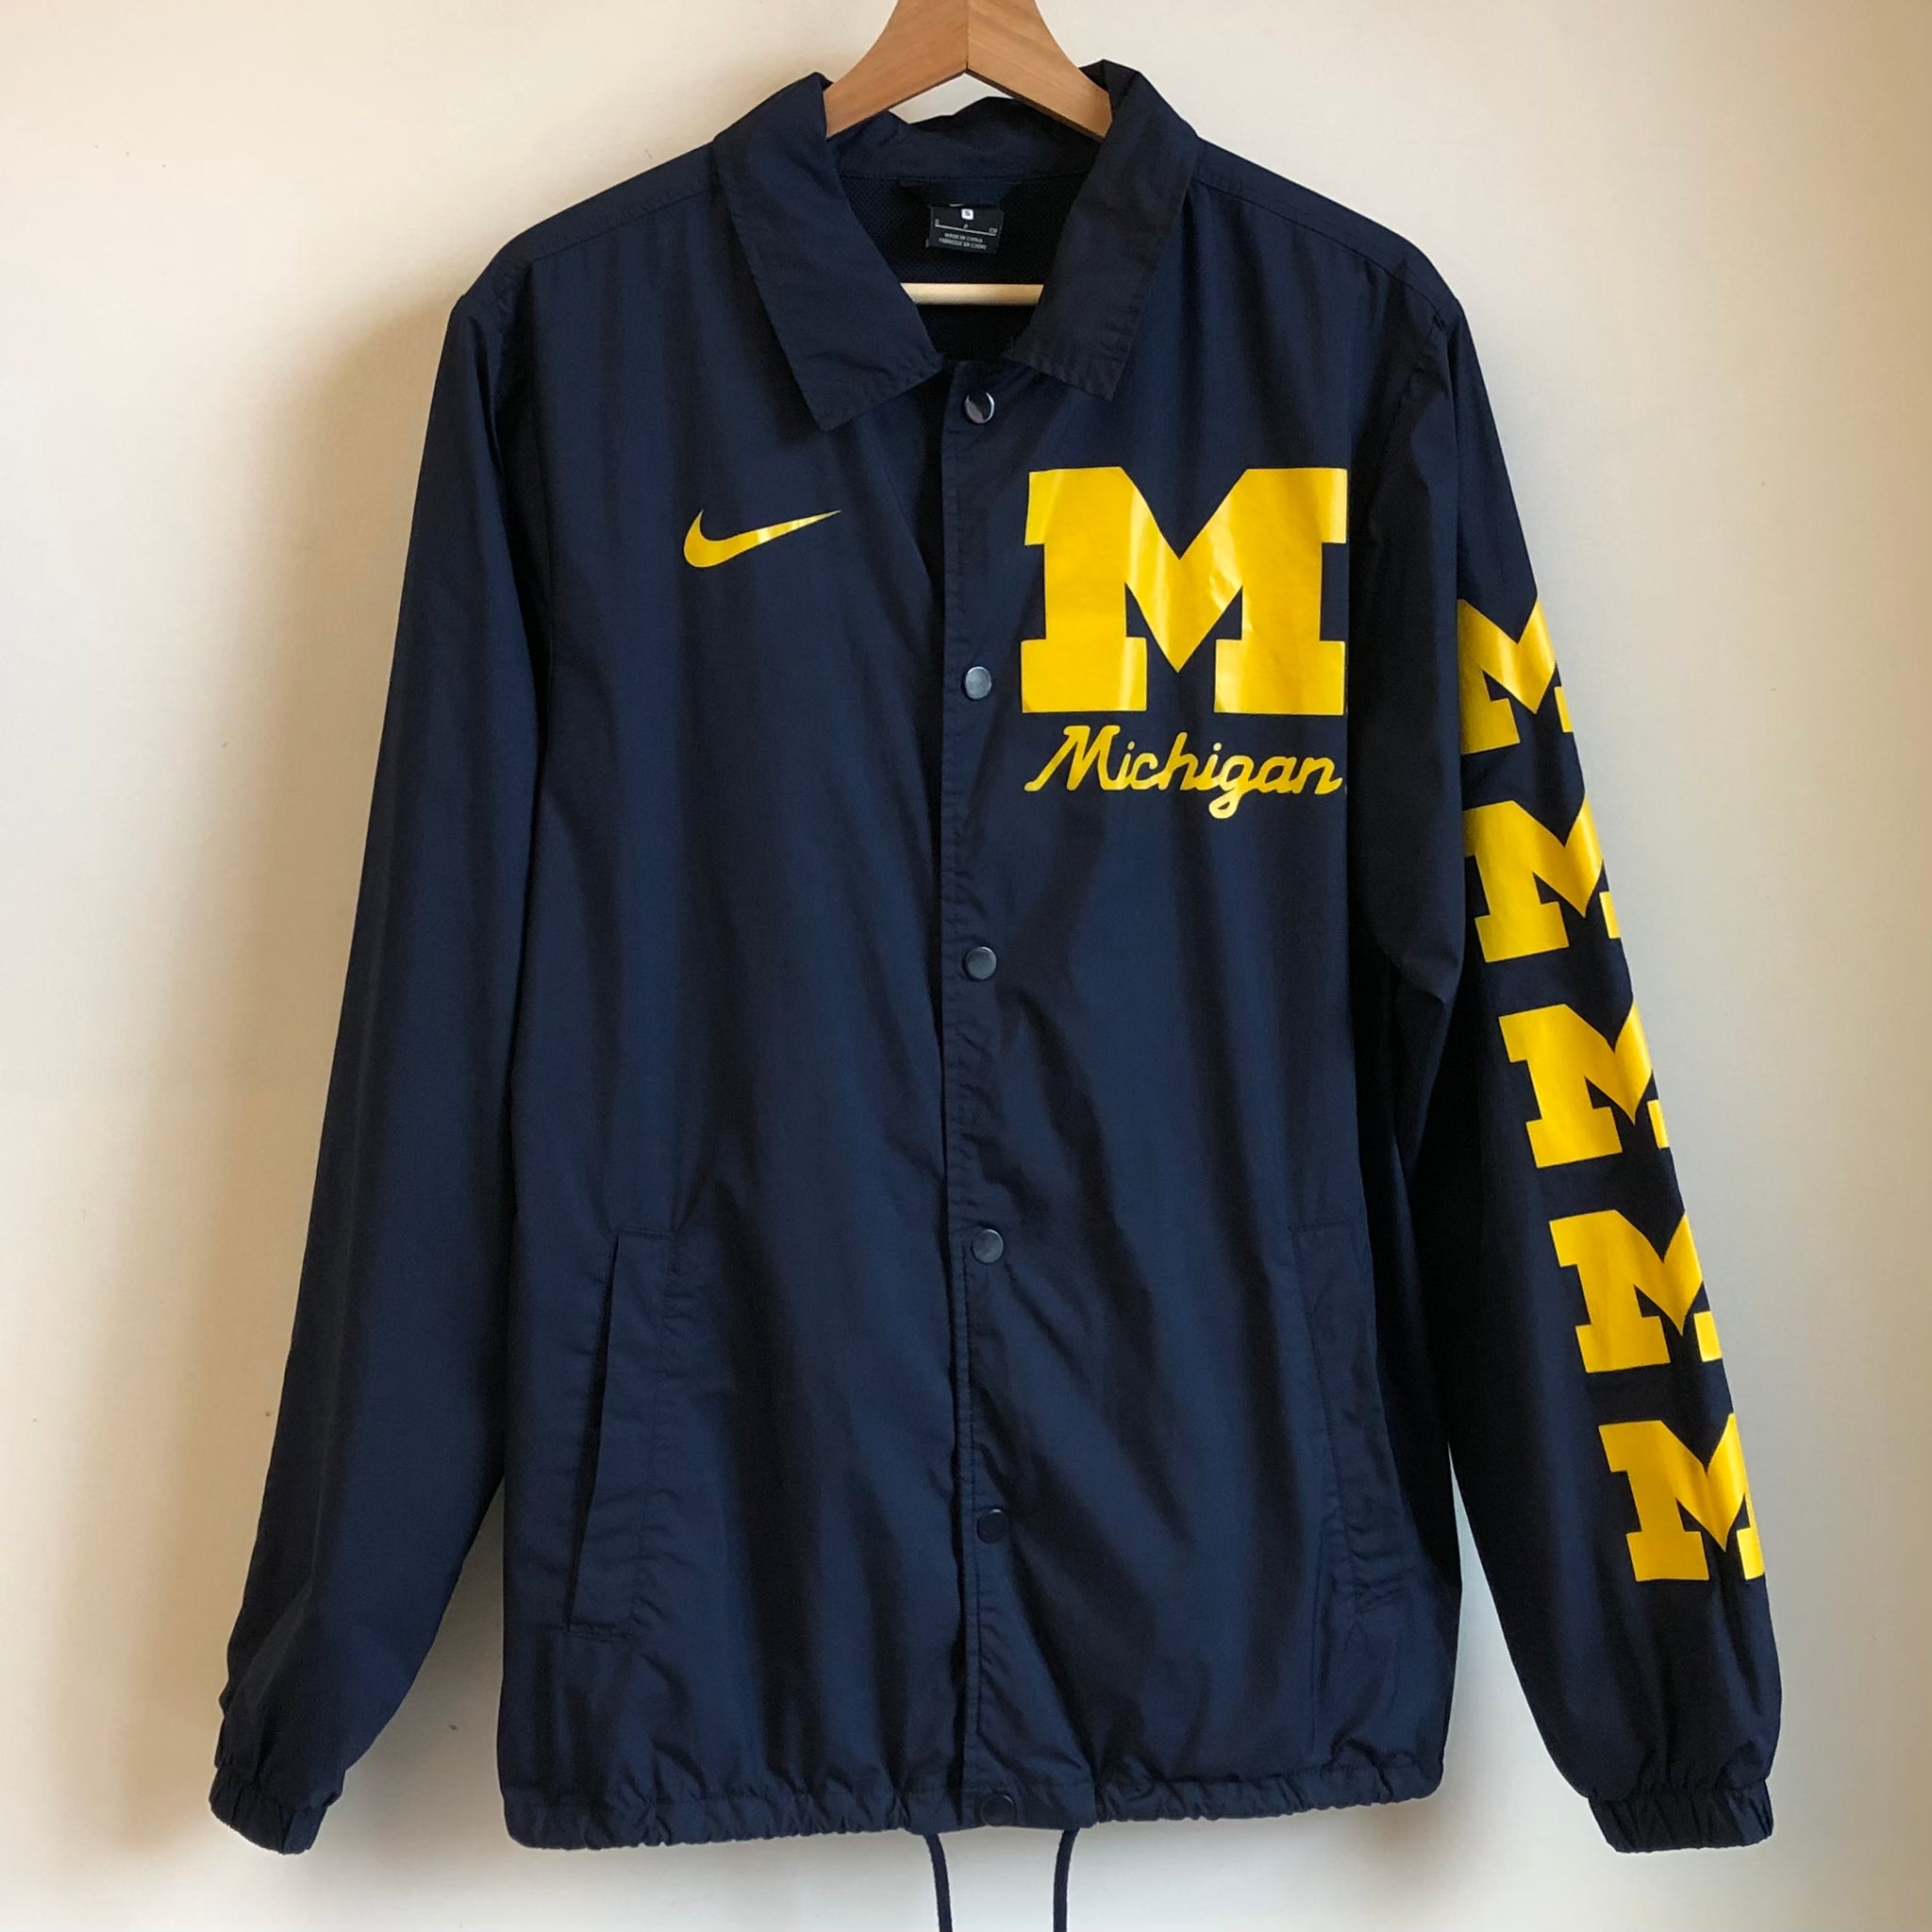 Michigan Wolverines Jacket Nike S